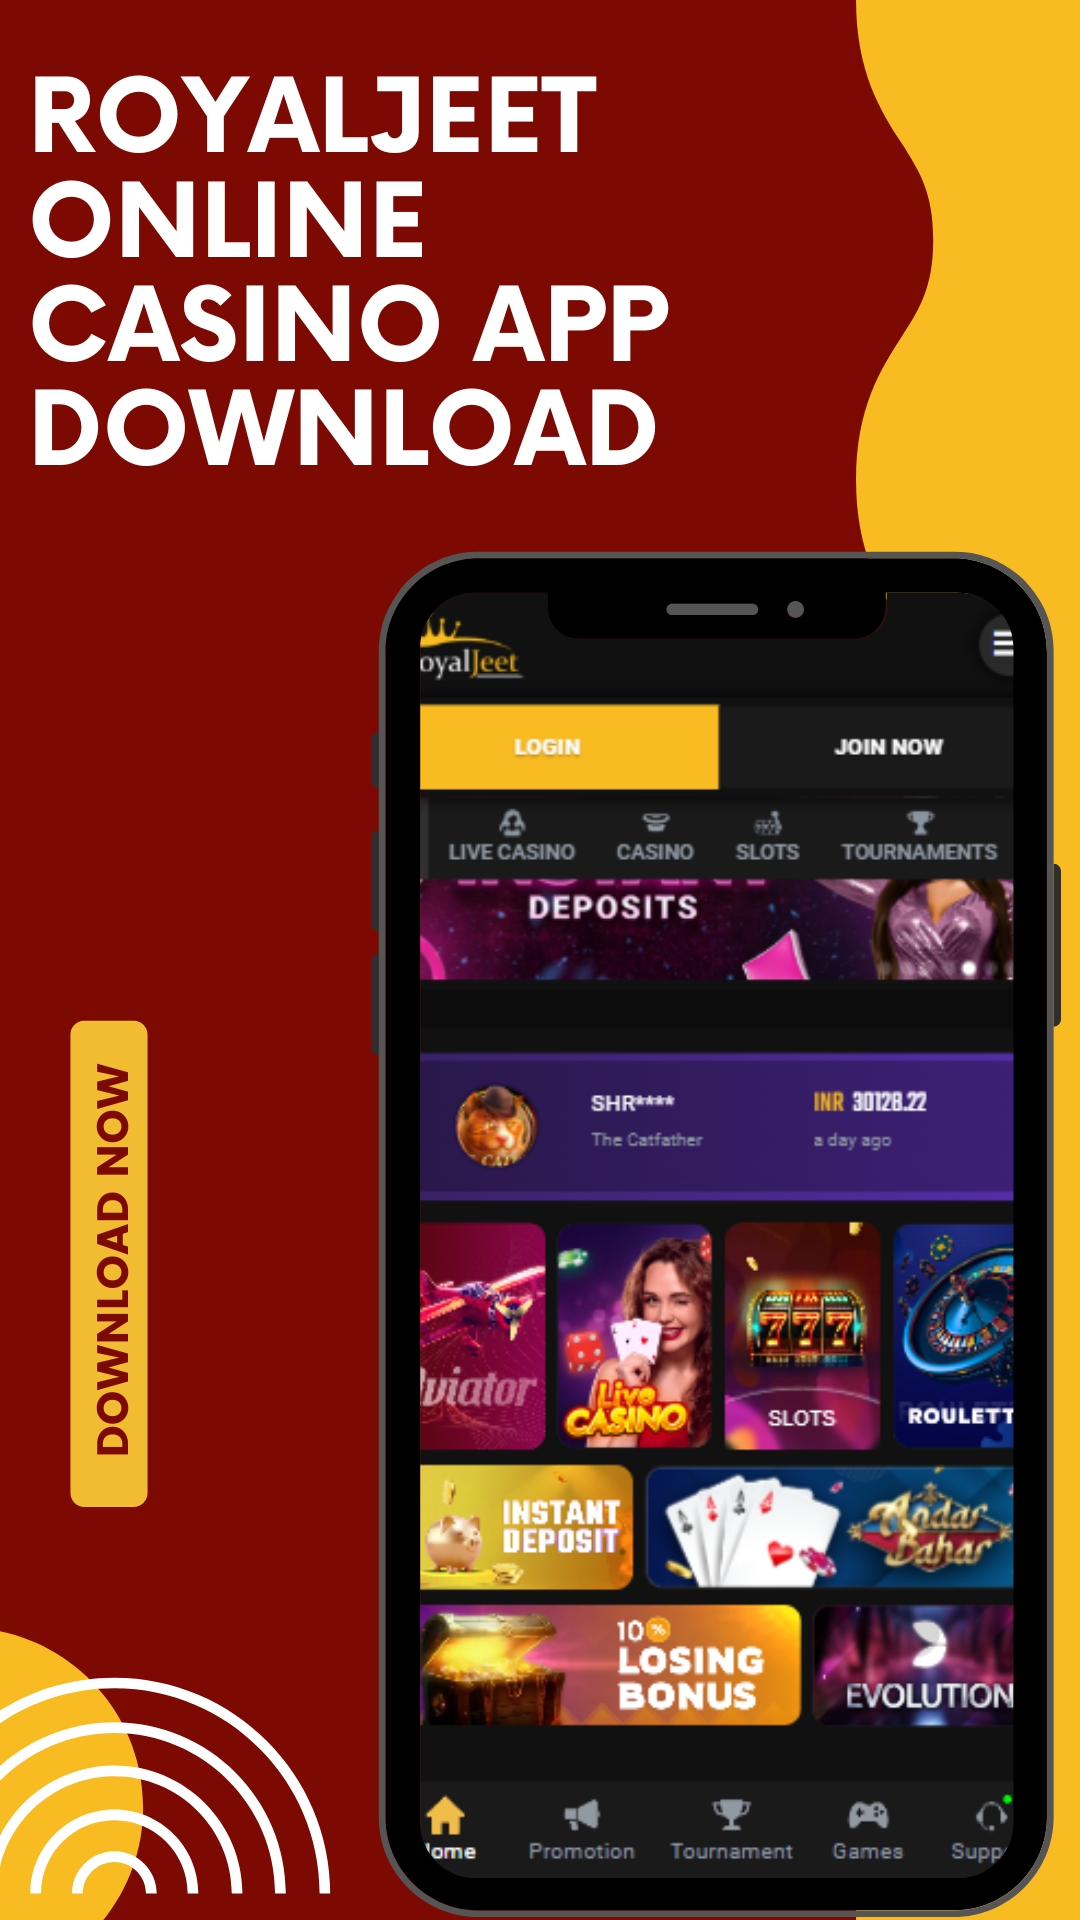 RoyalJeet Casino App Download - Karnataka - Bangalore ID1548405